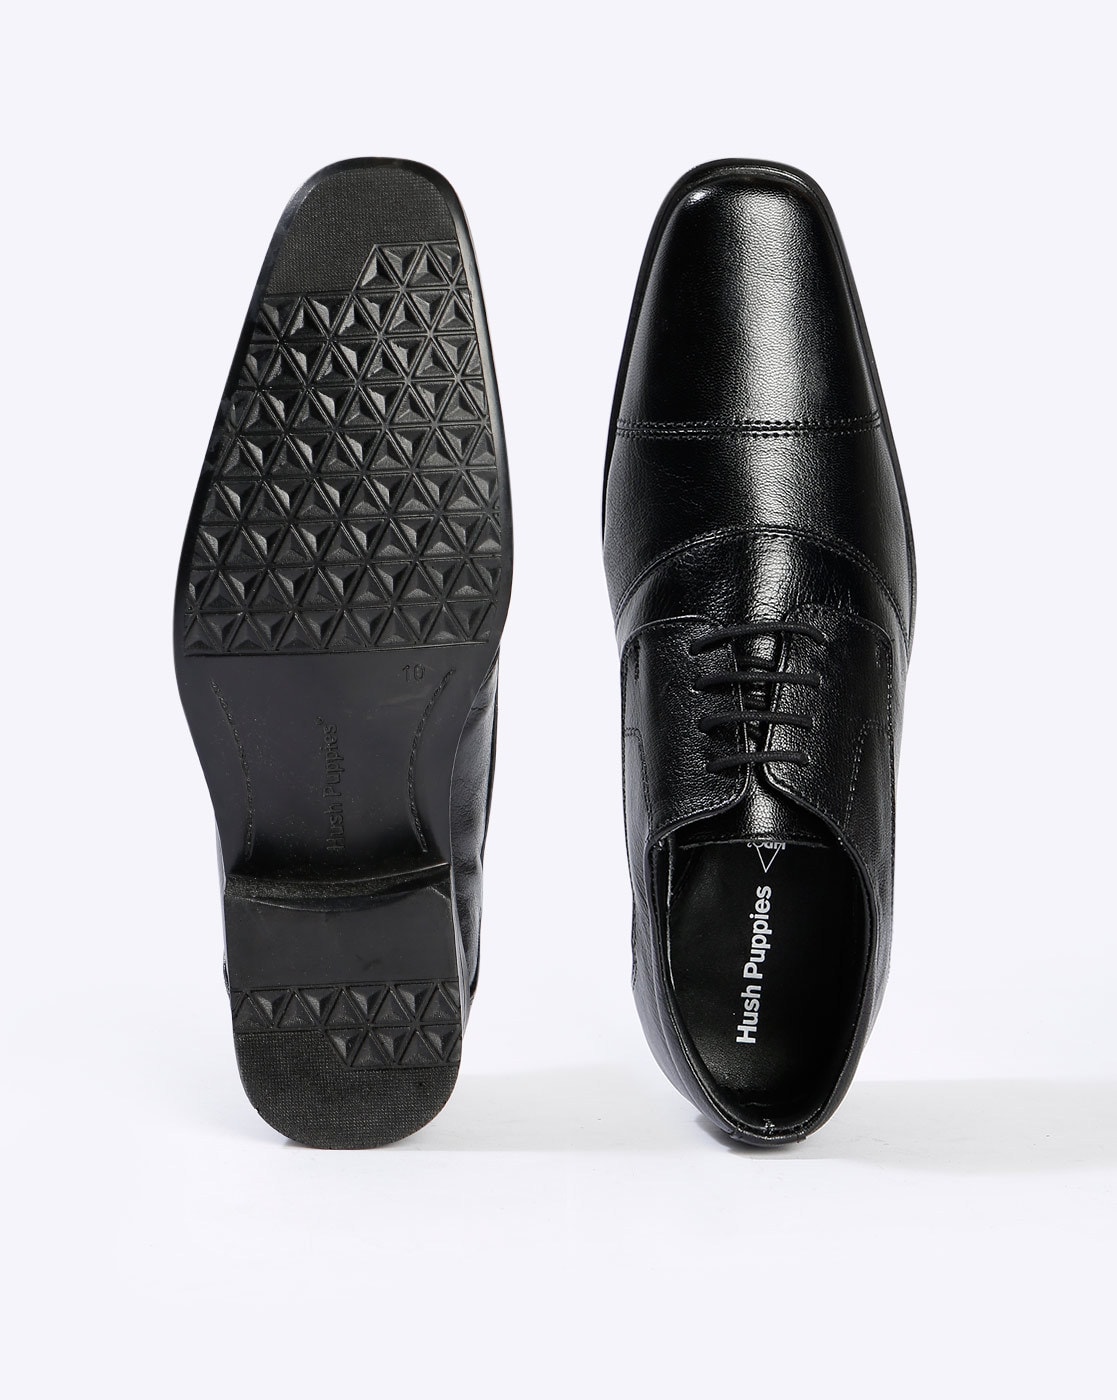 hush puppies hpo2 flex black formal shoes